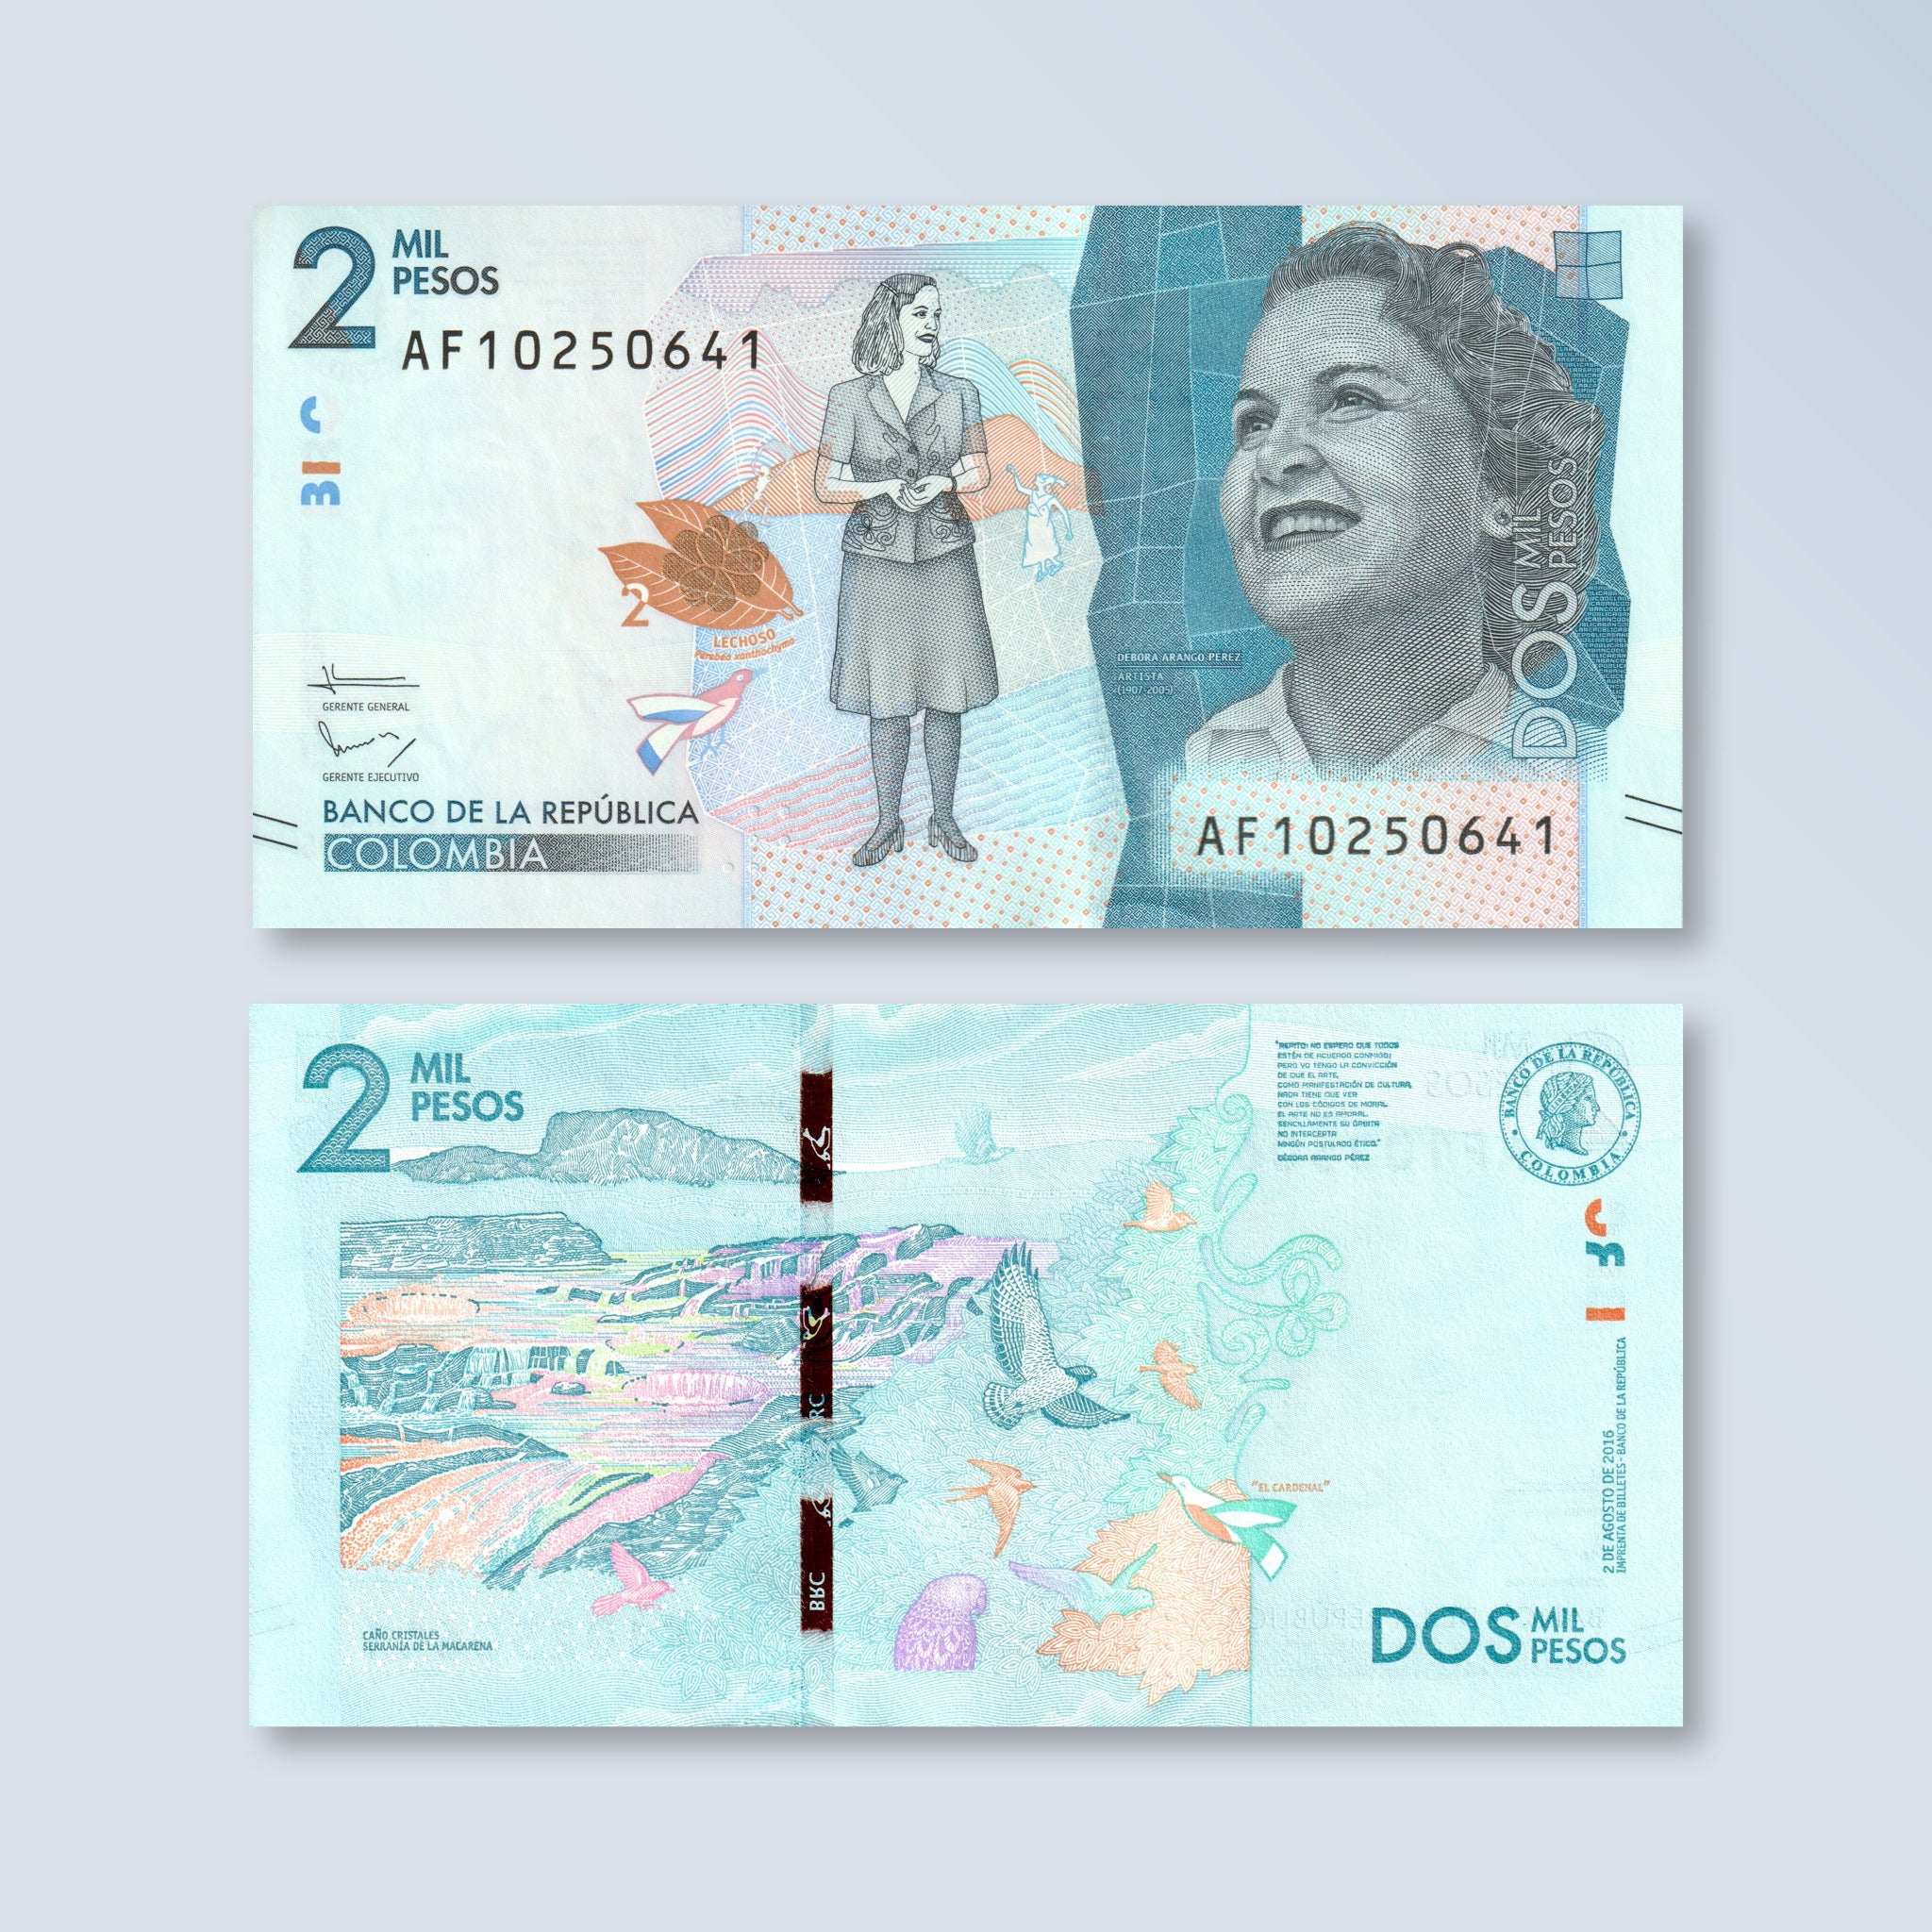 Colombia 2000 Pesos, 2016, B993b, P458b, UNC - Robert's World Money - World Banknotes